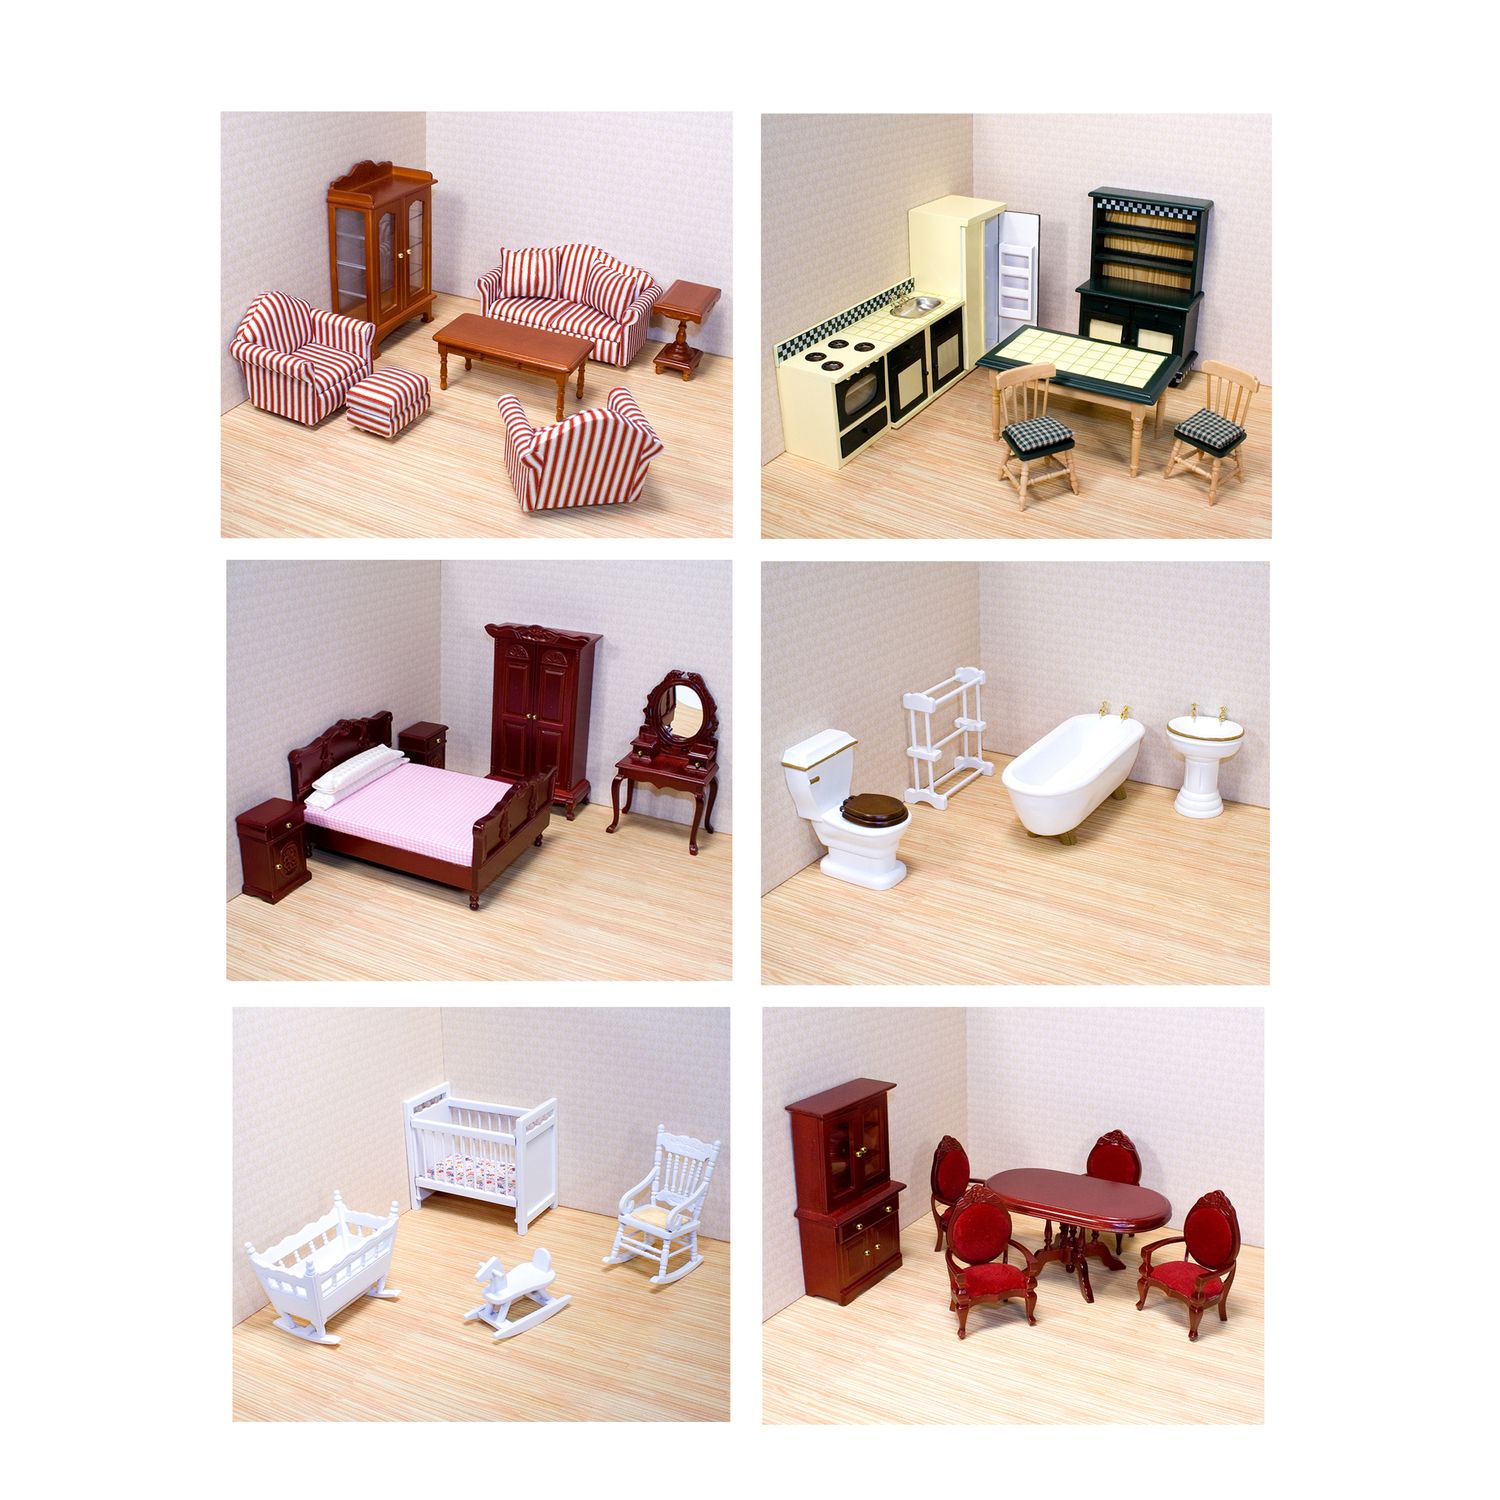 kohls dollhouse furniture